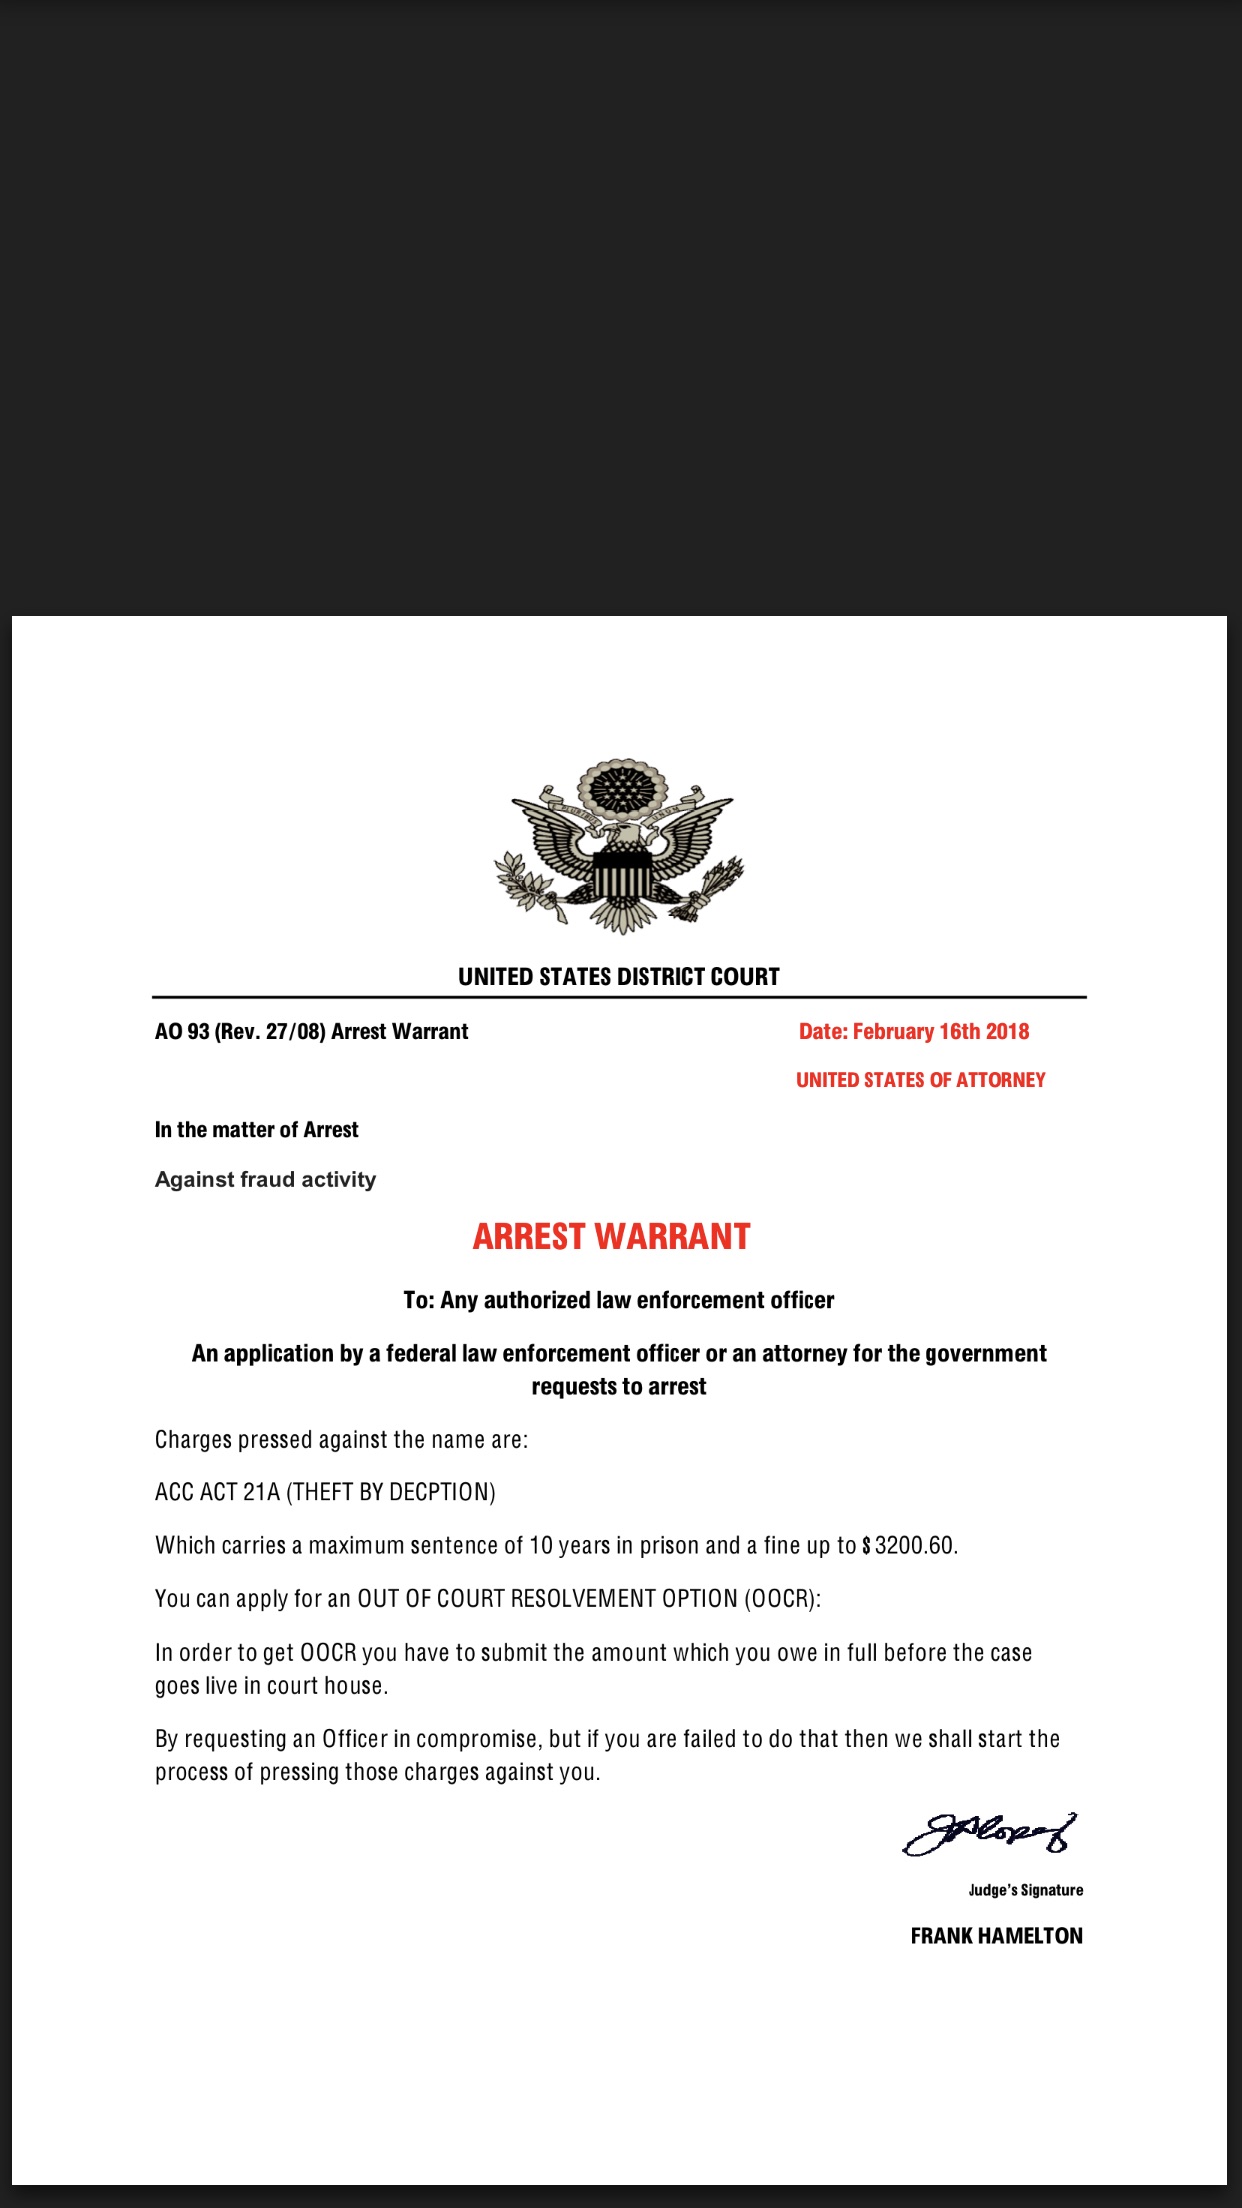 “Arrest warrant”